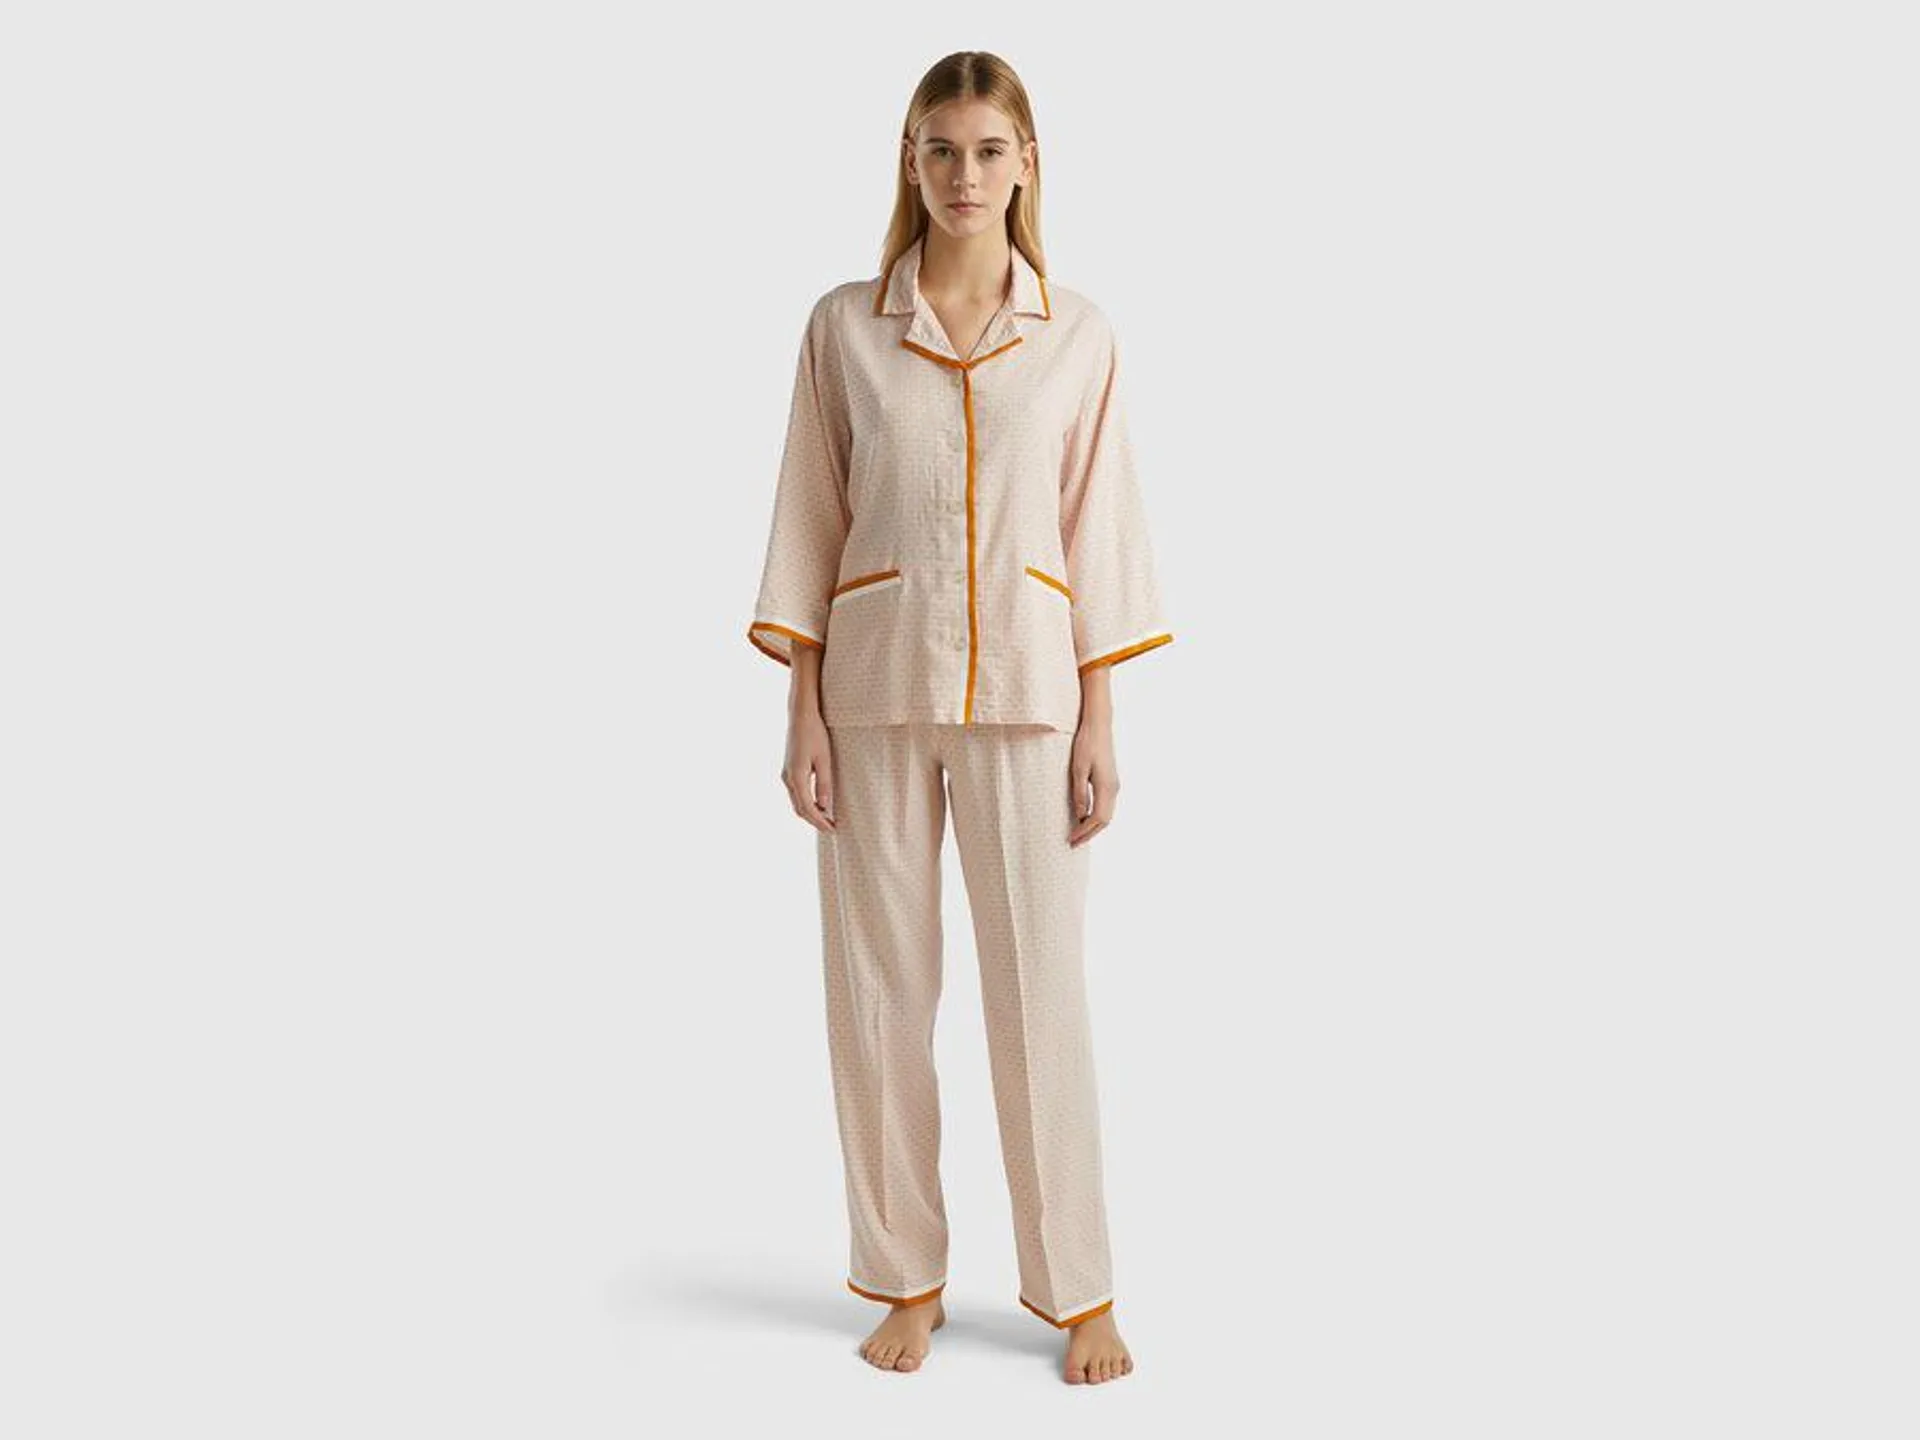 Monogram pyjamas in sustainable viscose